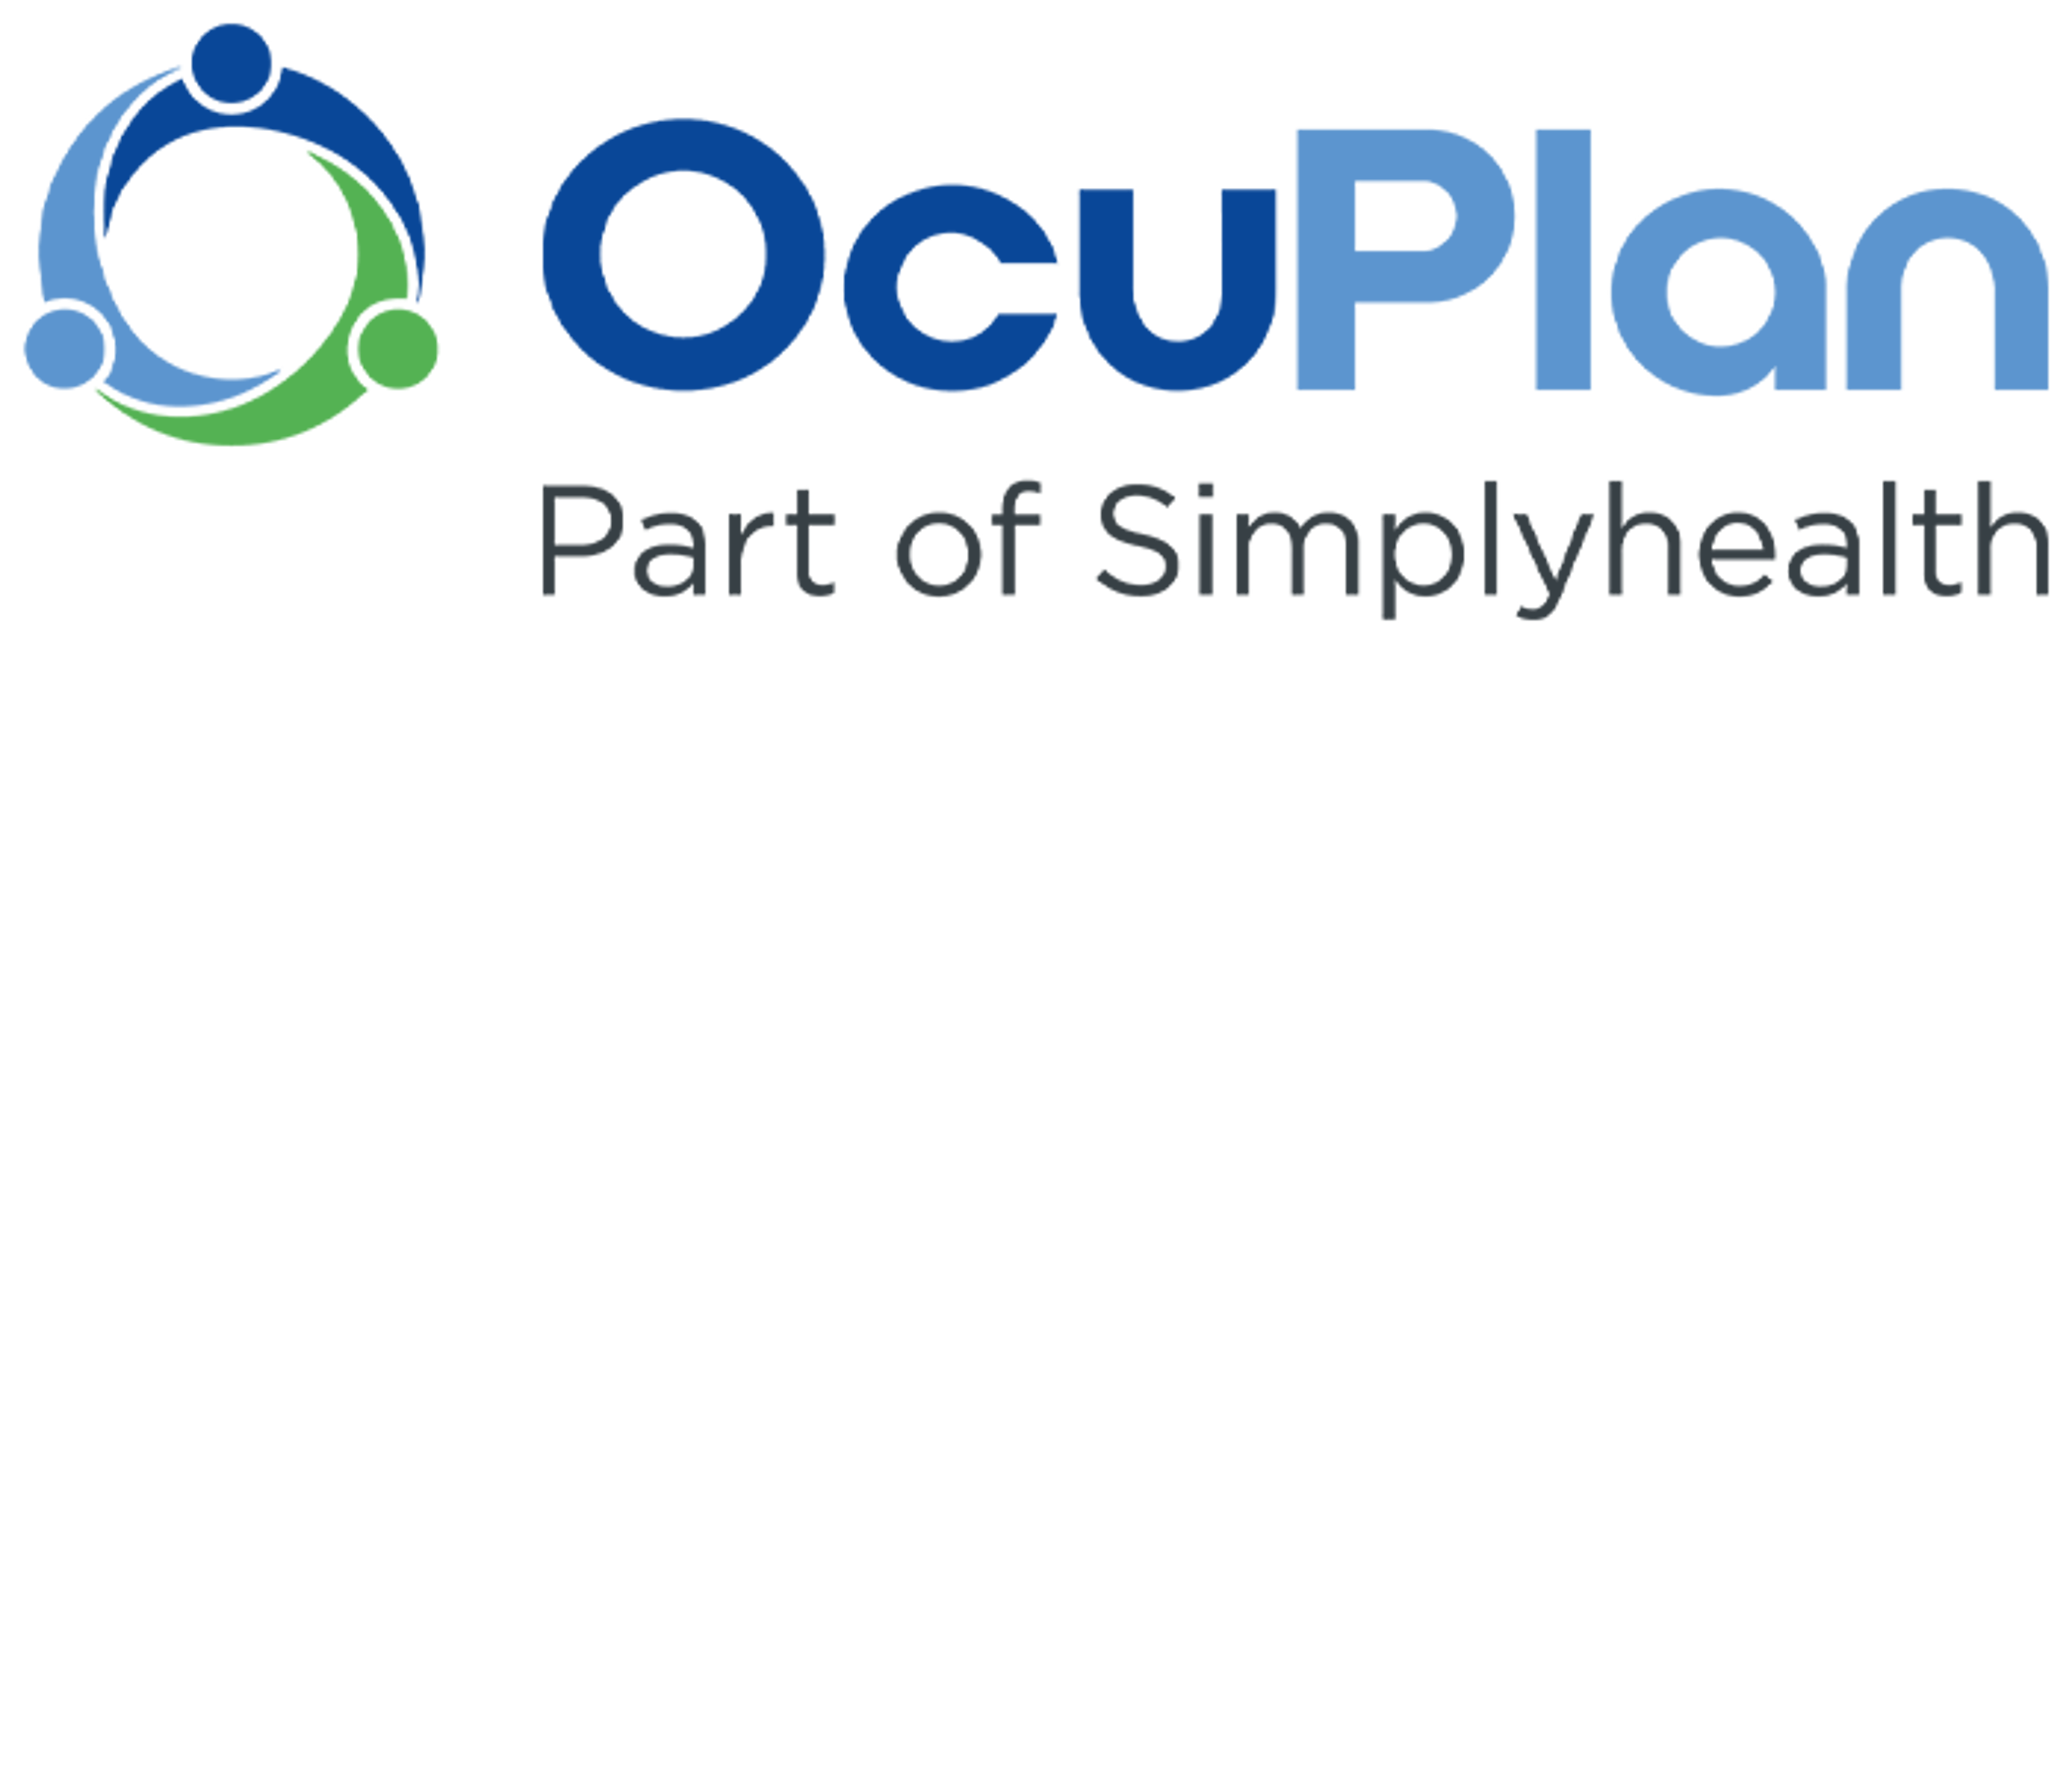 Ocuplan Logo 